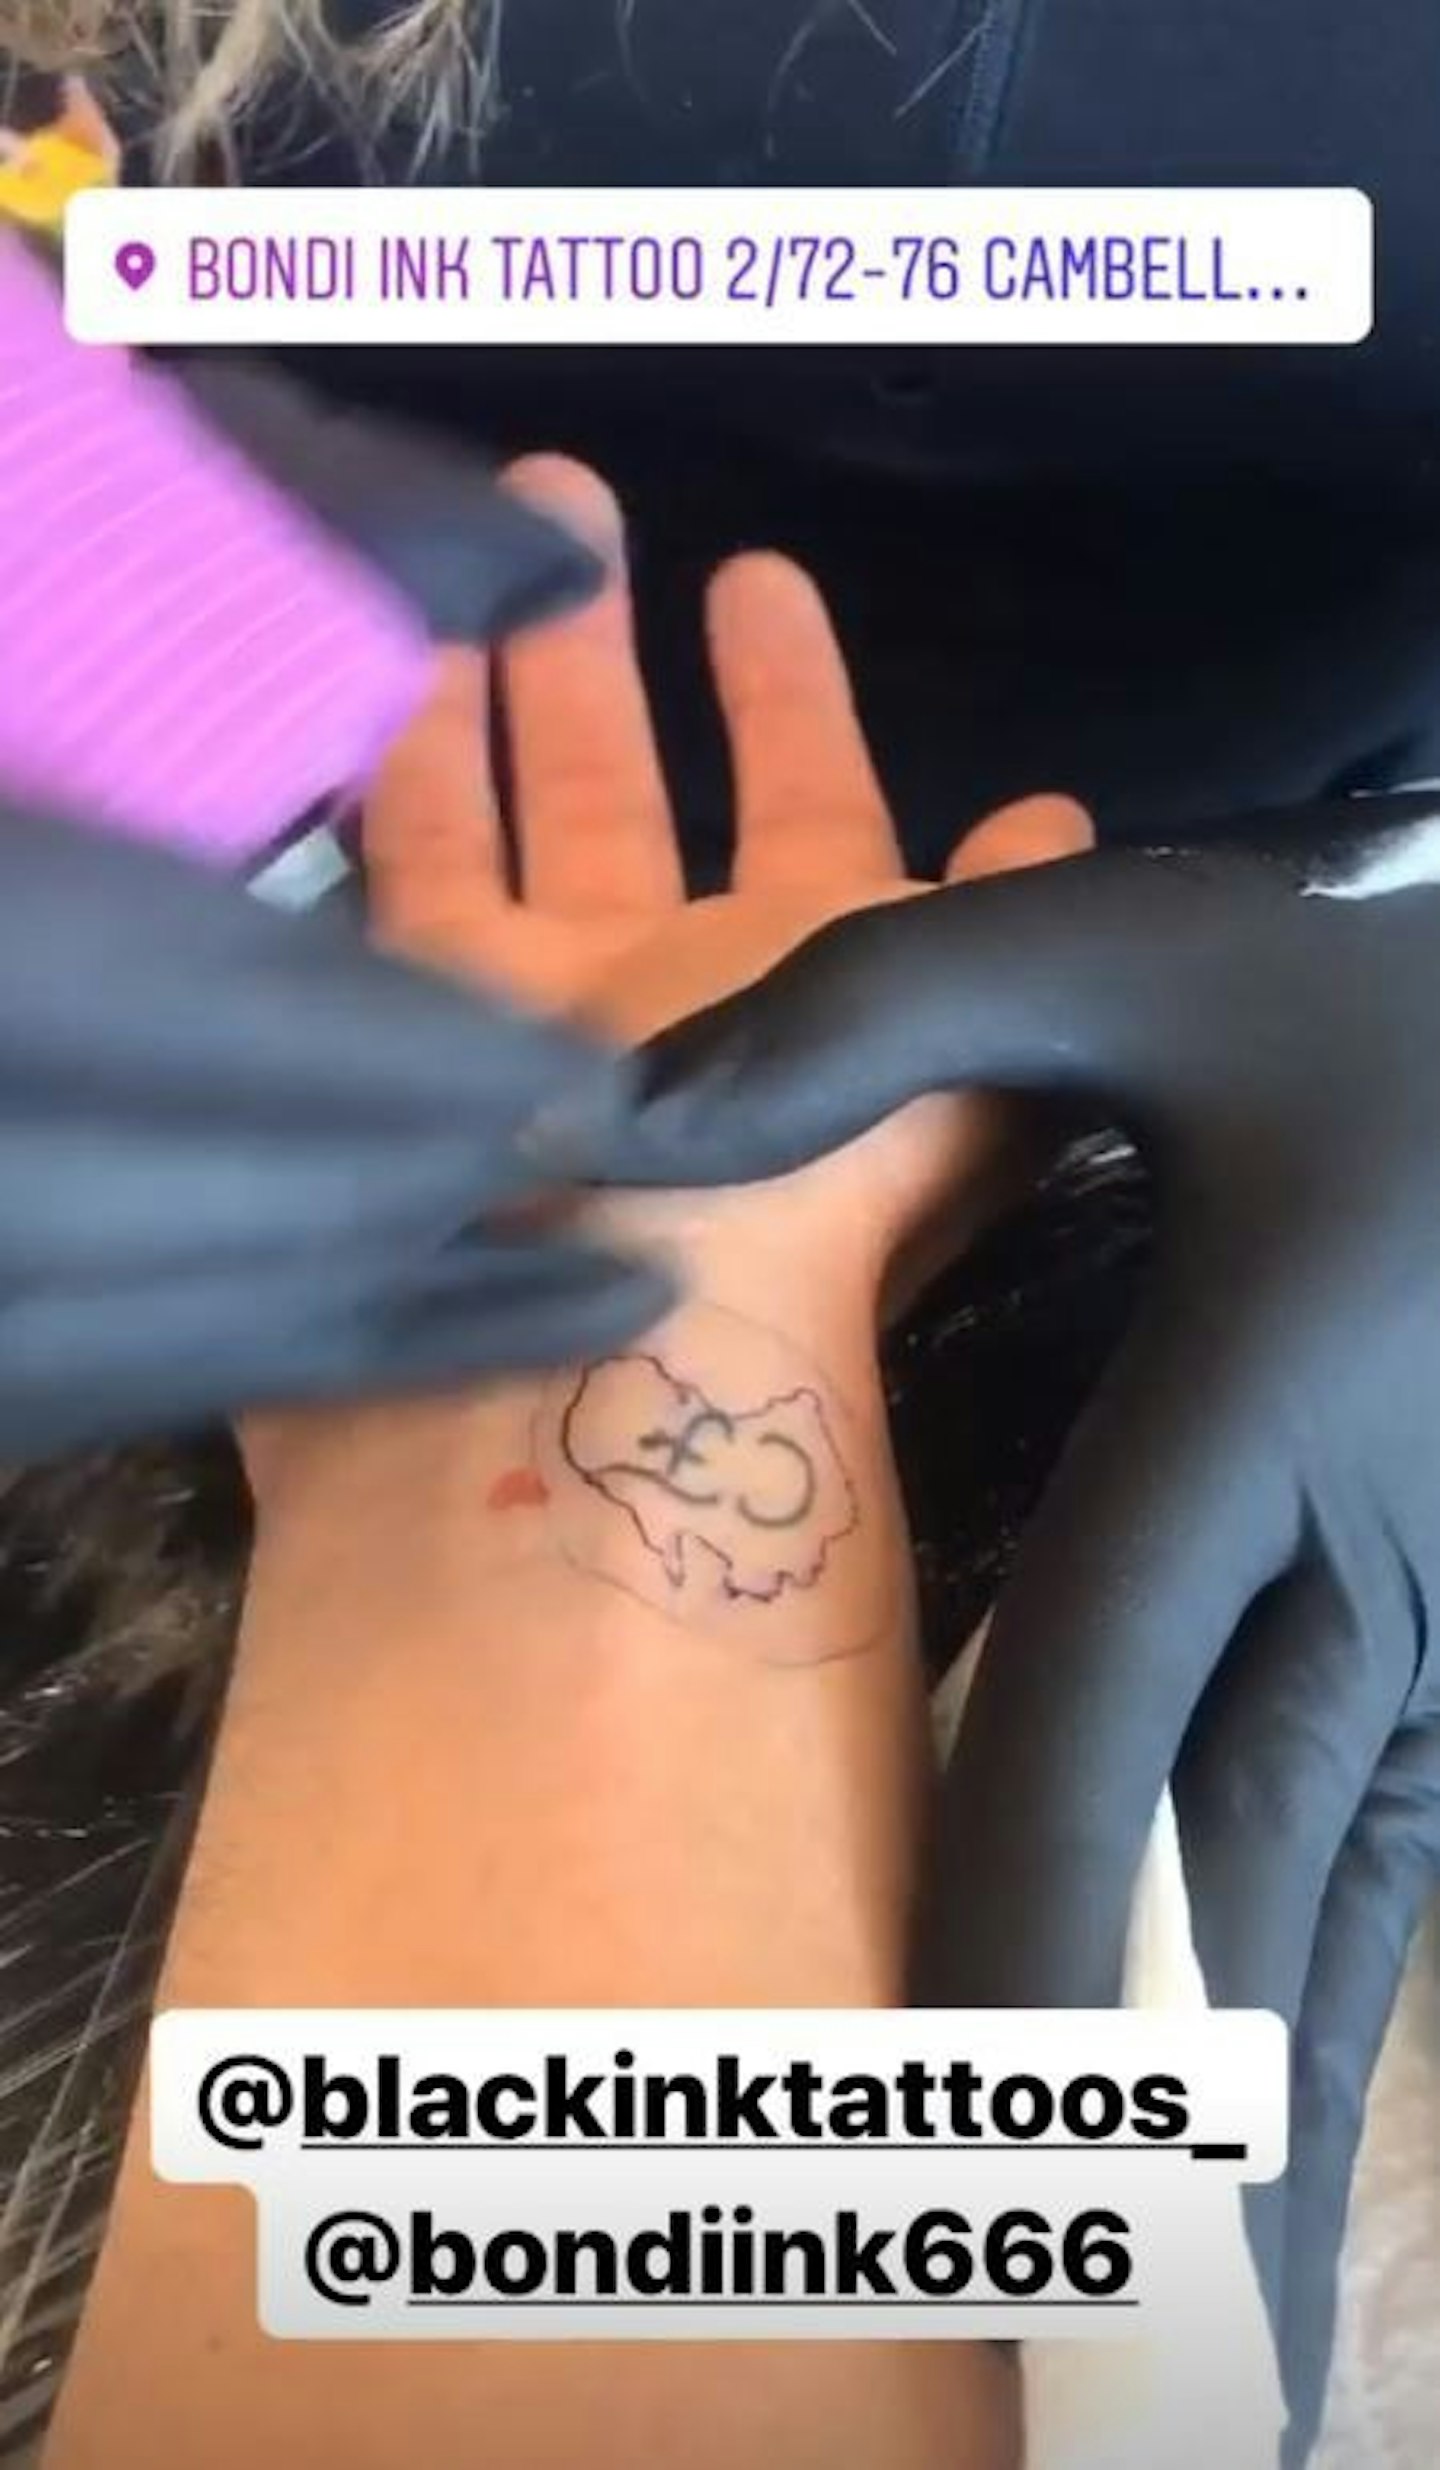 Andrew Brady 'CF' initial tattoo